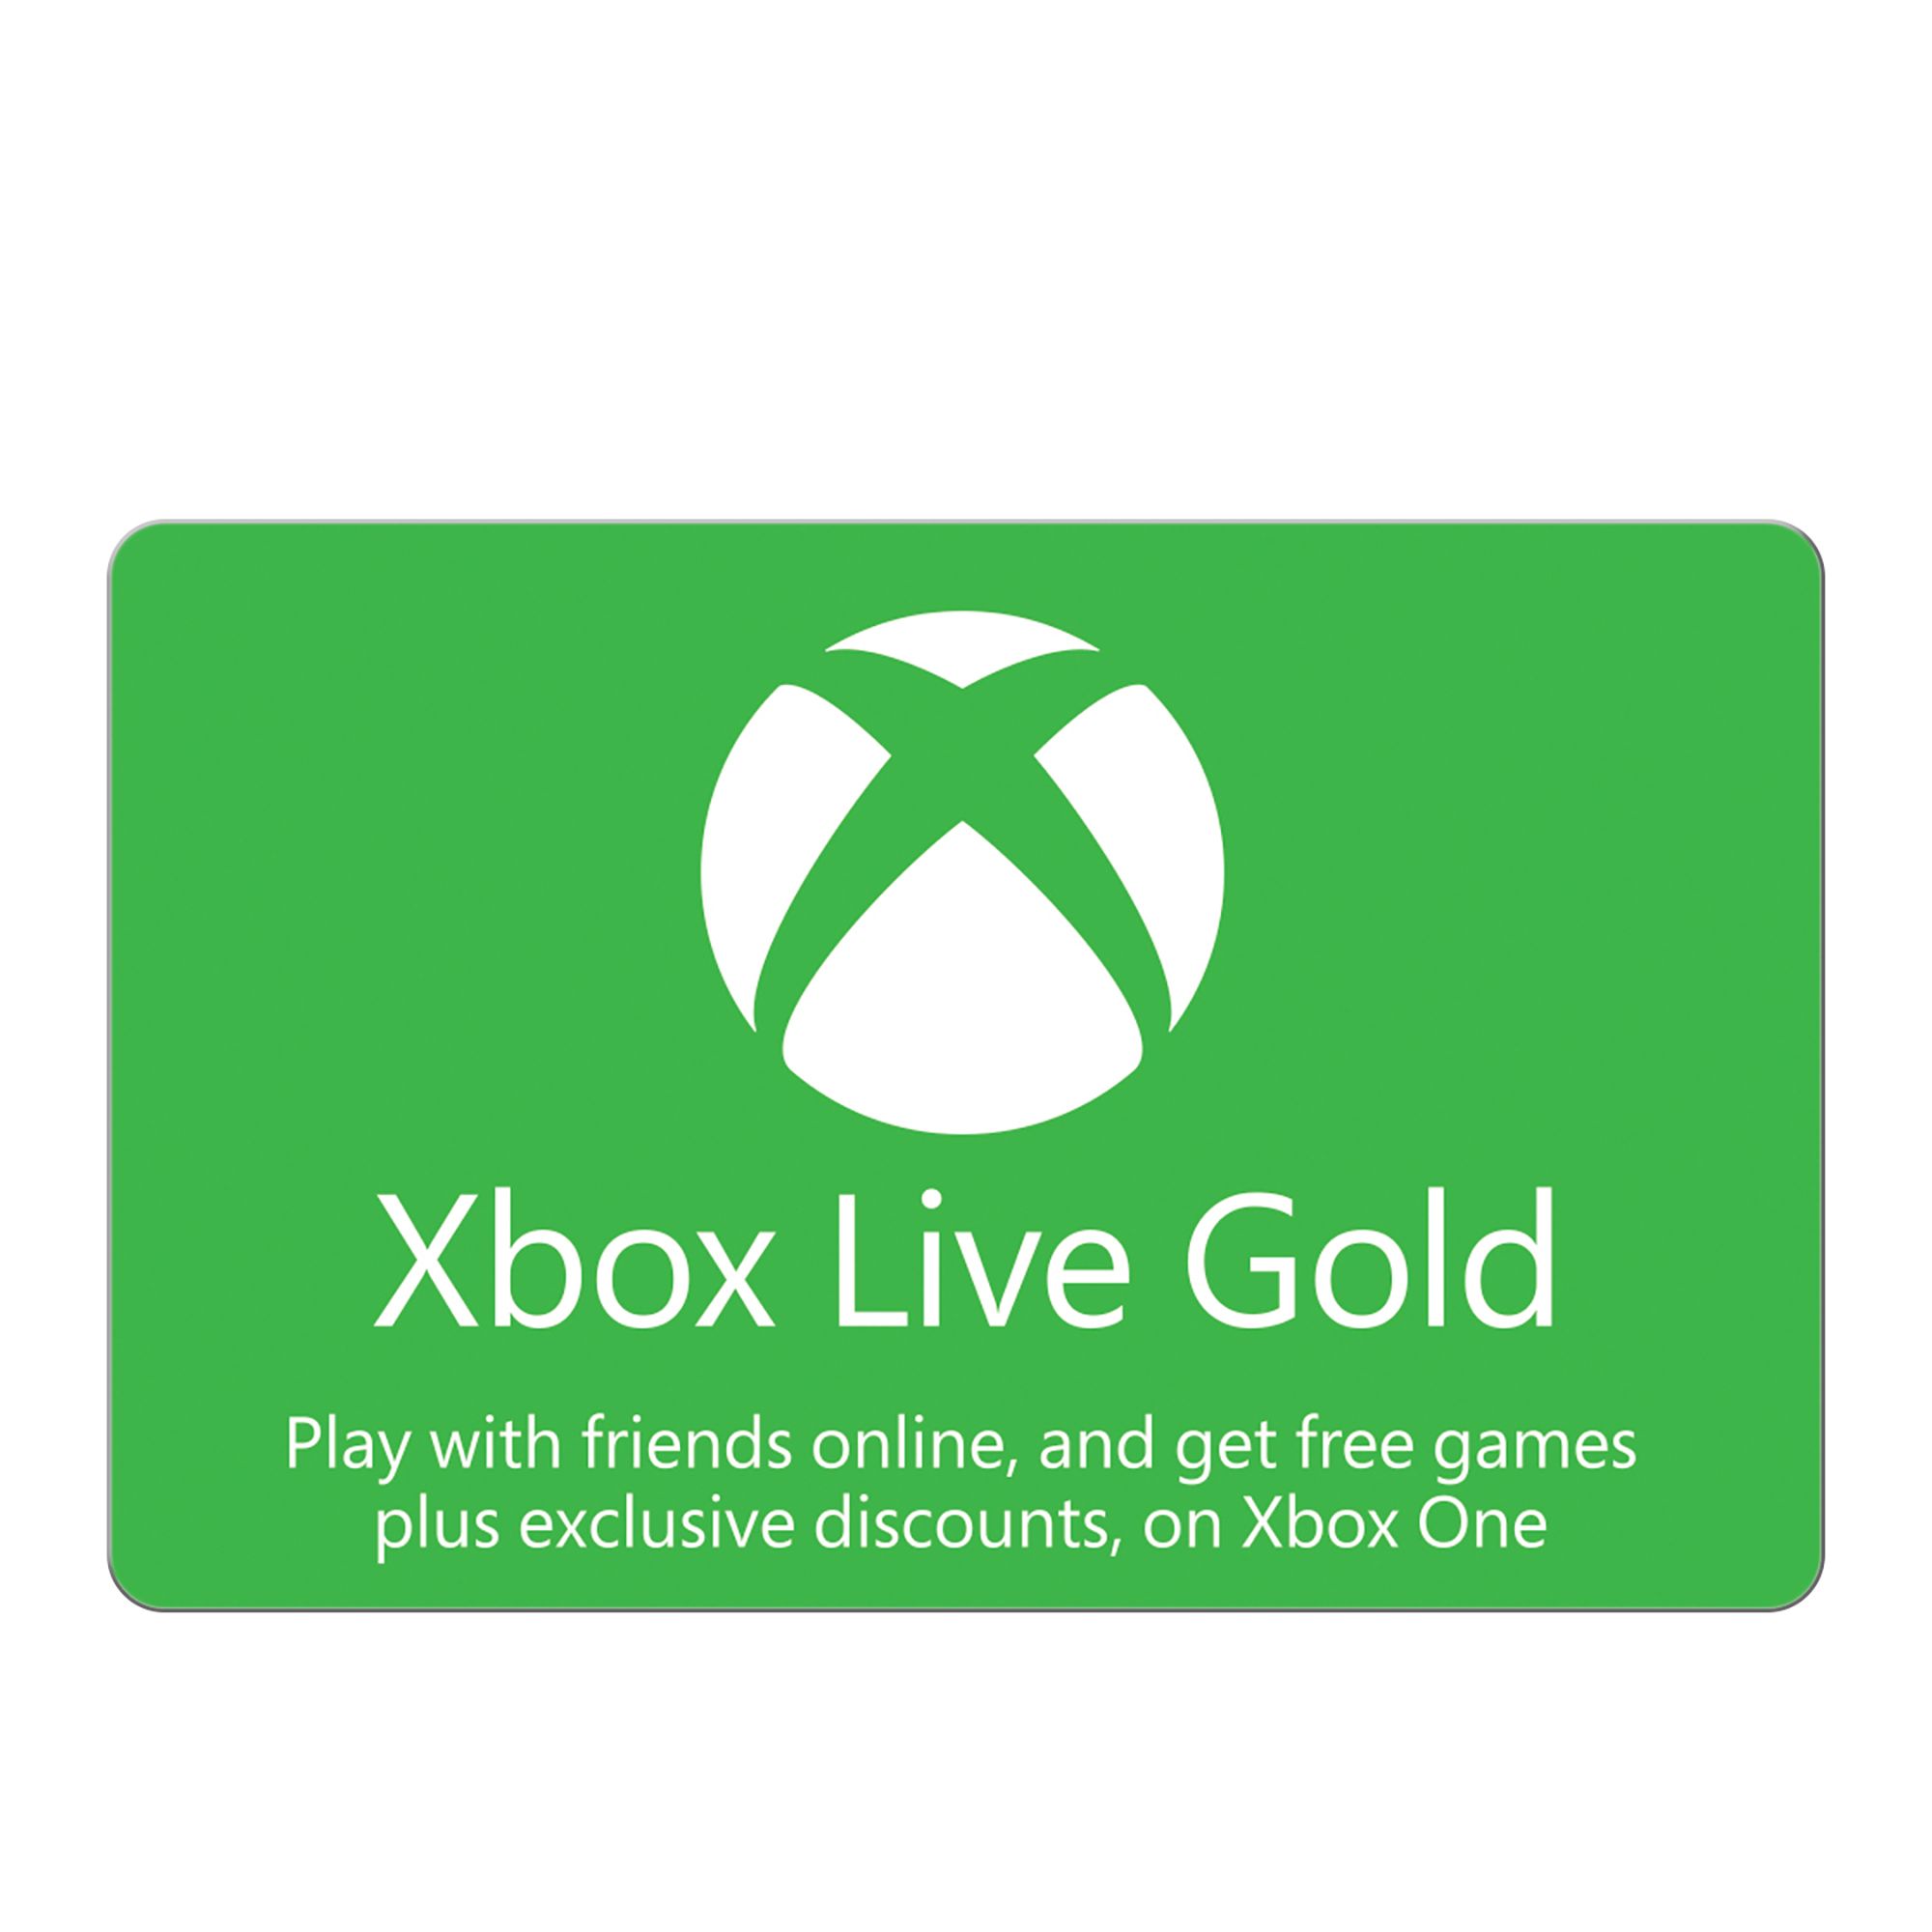 xbox live gold deals 3 month